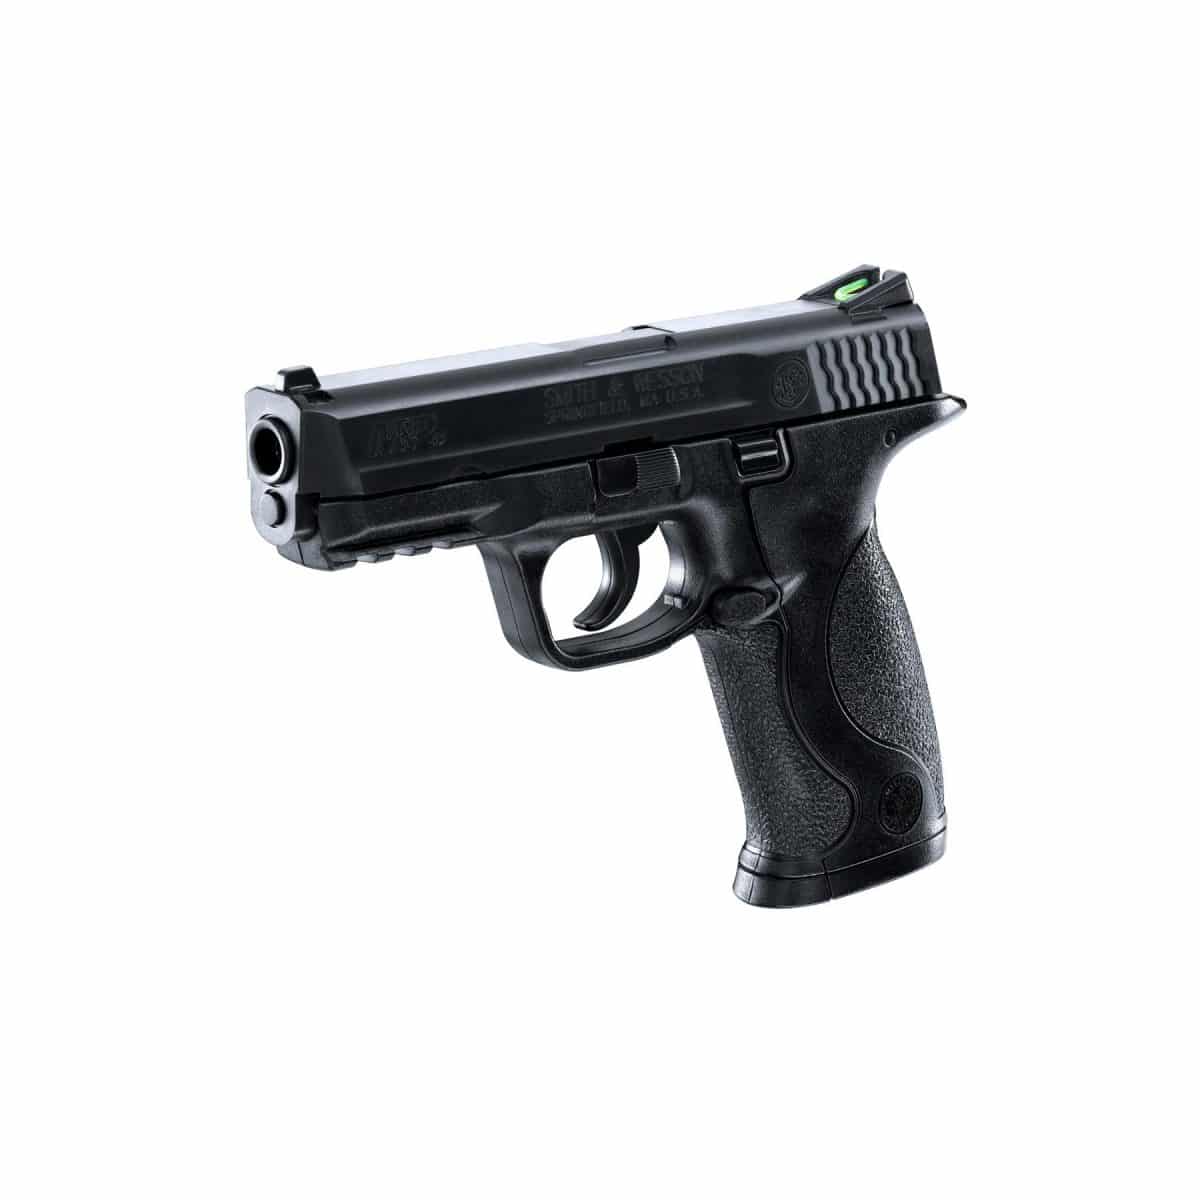 Pistol Smith & Wesson M&P 40 CO2 2.6455